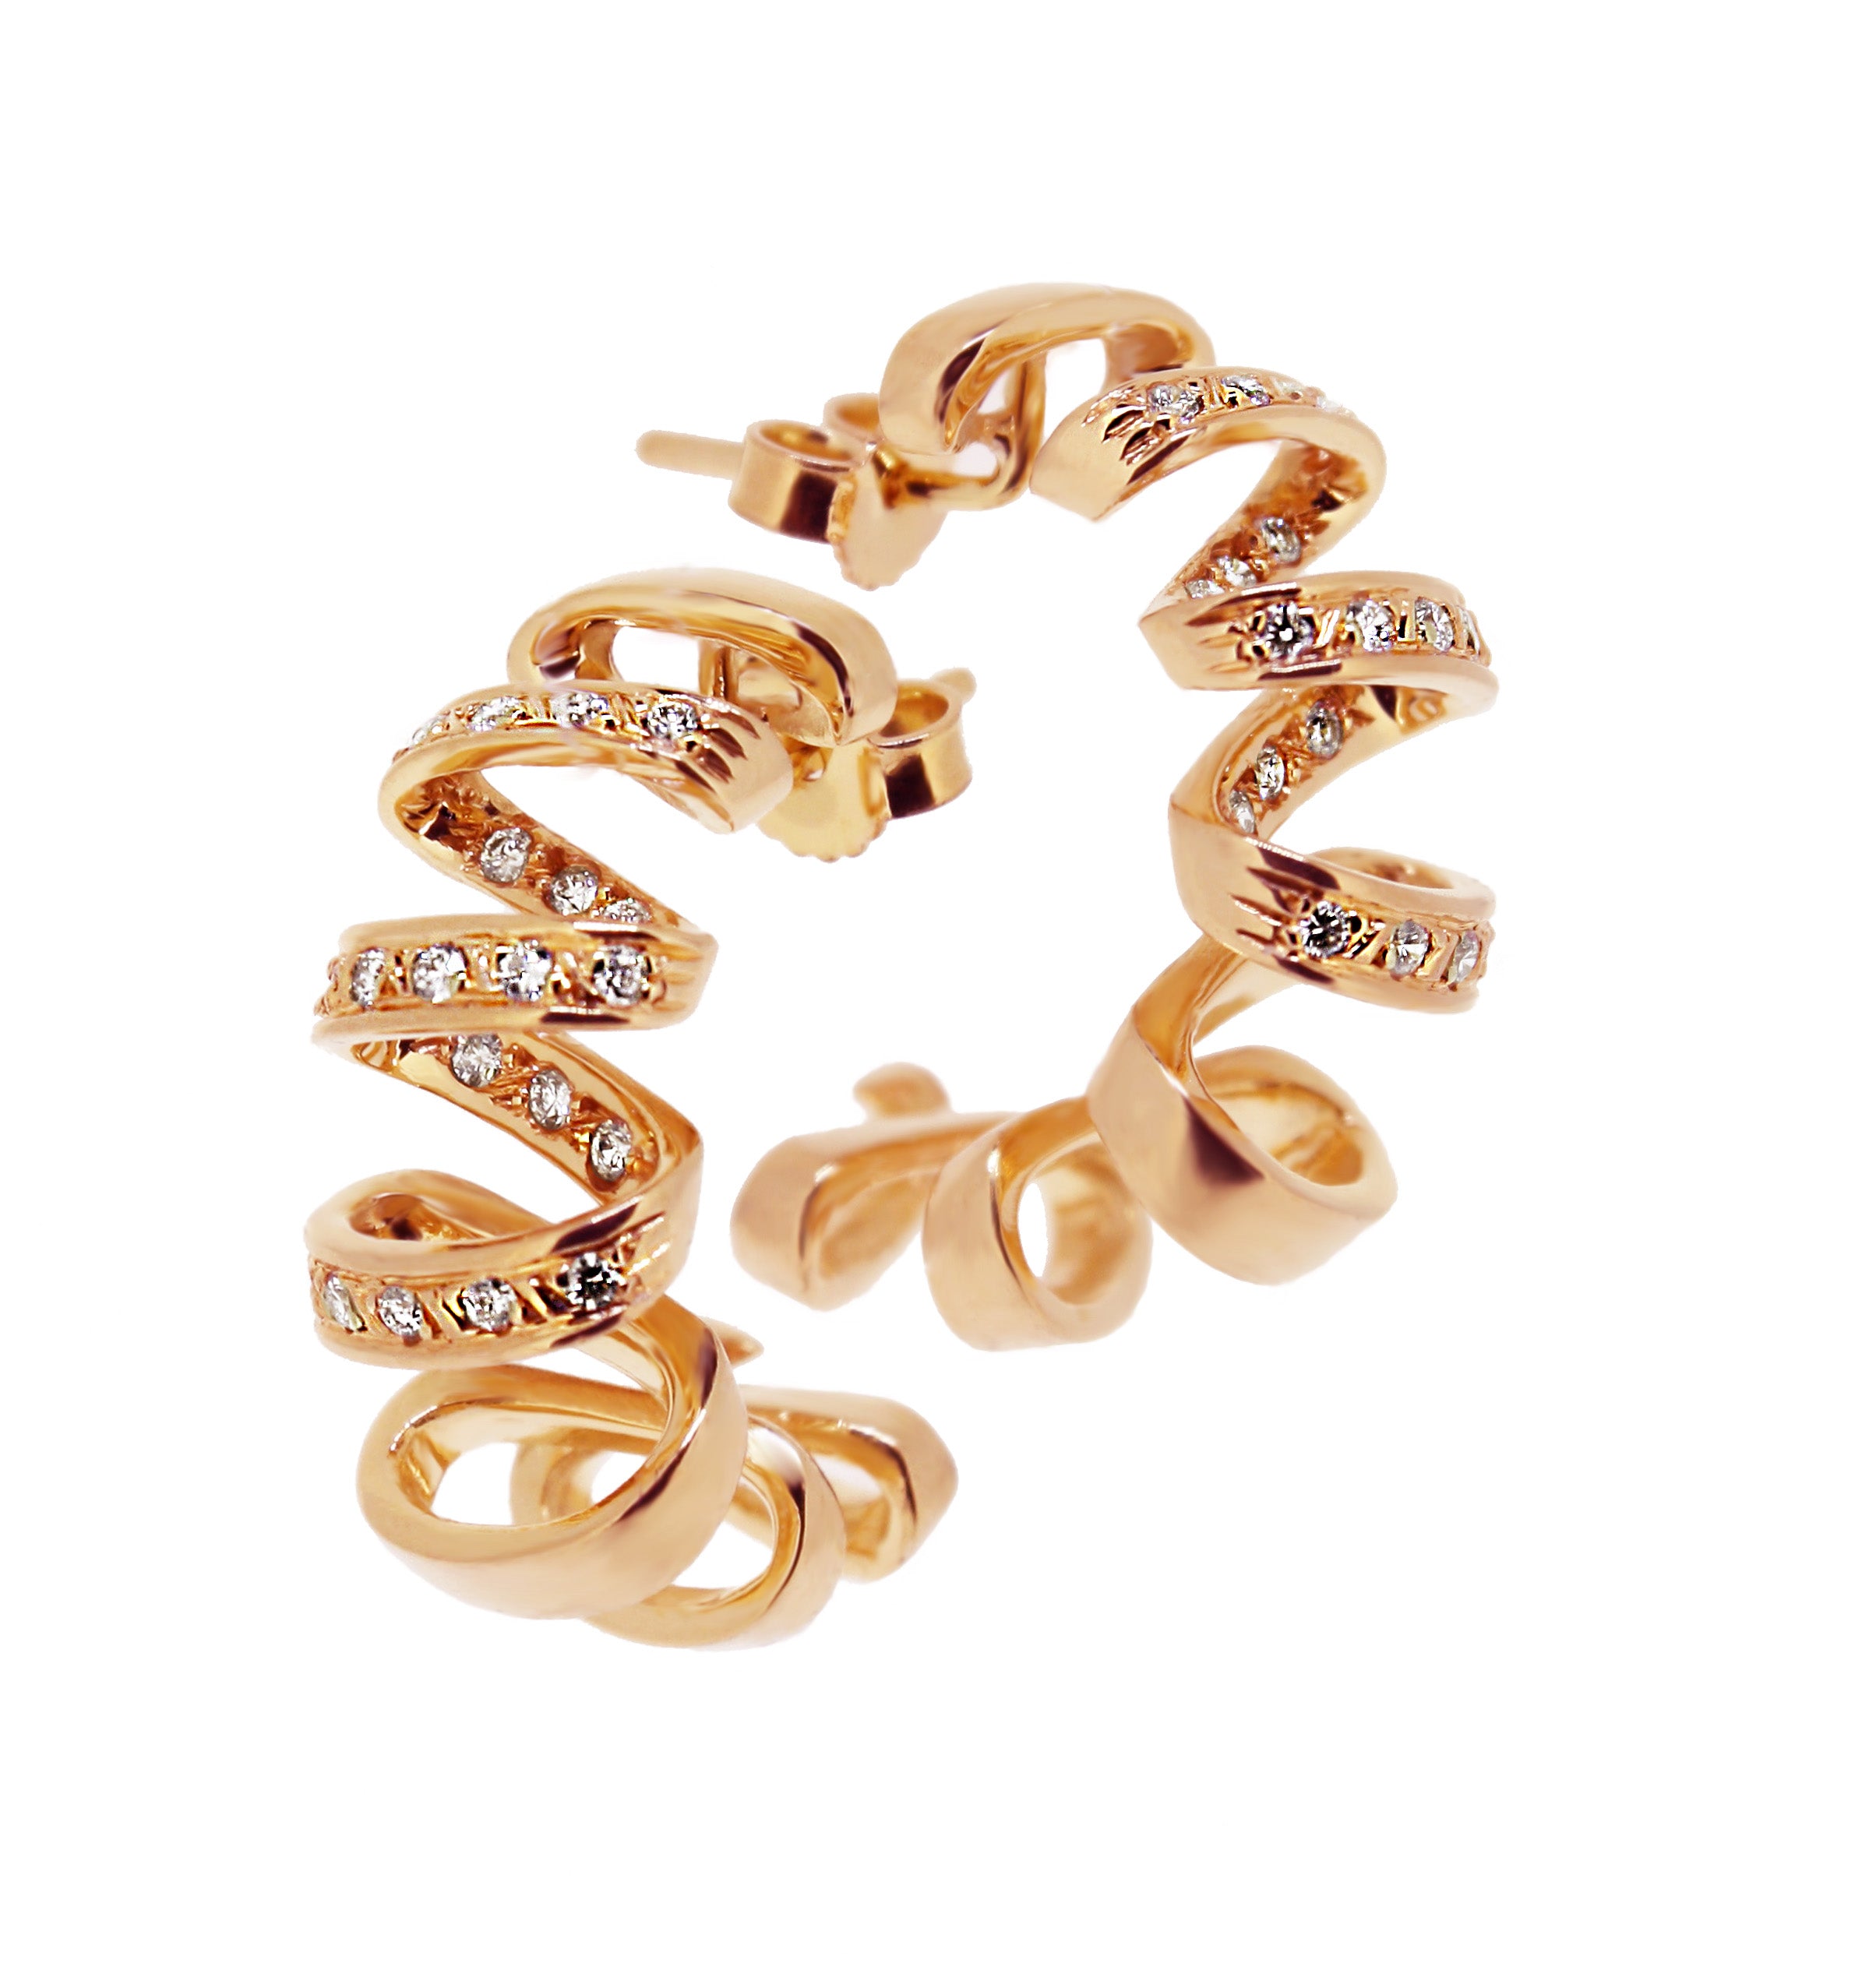 Tourbillon de la Vie earrings in 18-carat gold studded with diamonds